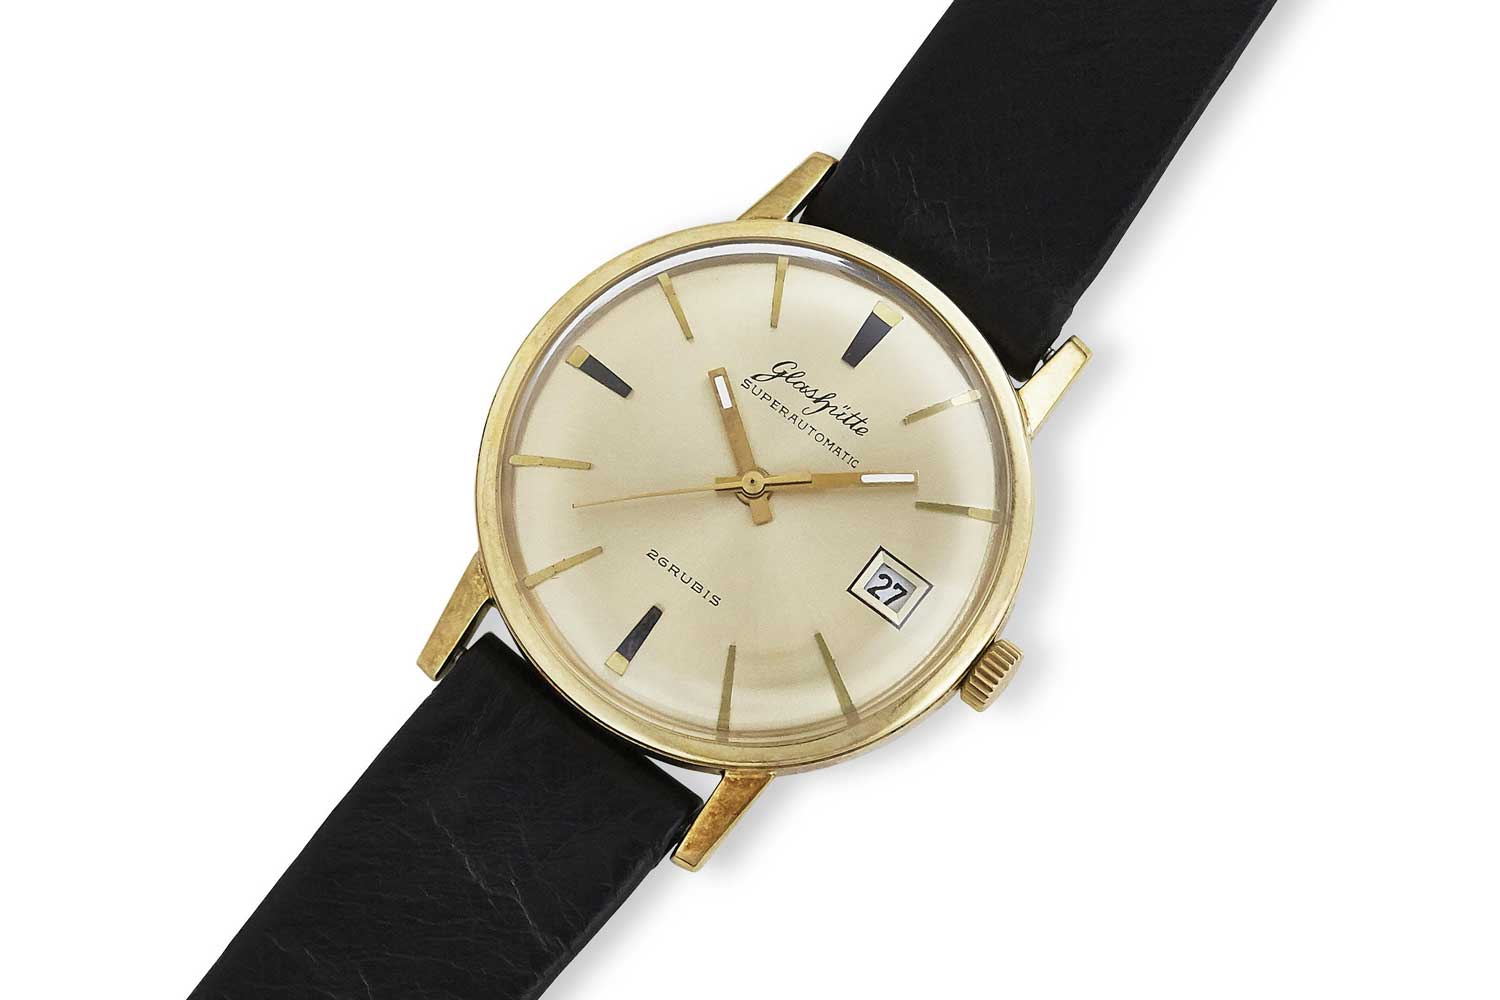 Wristwatch manufactured by the GUB, circa 1970